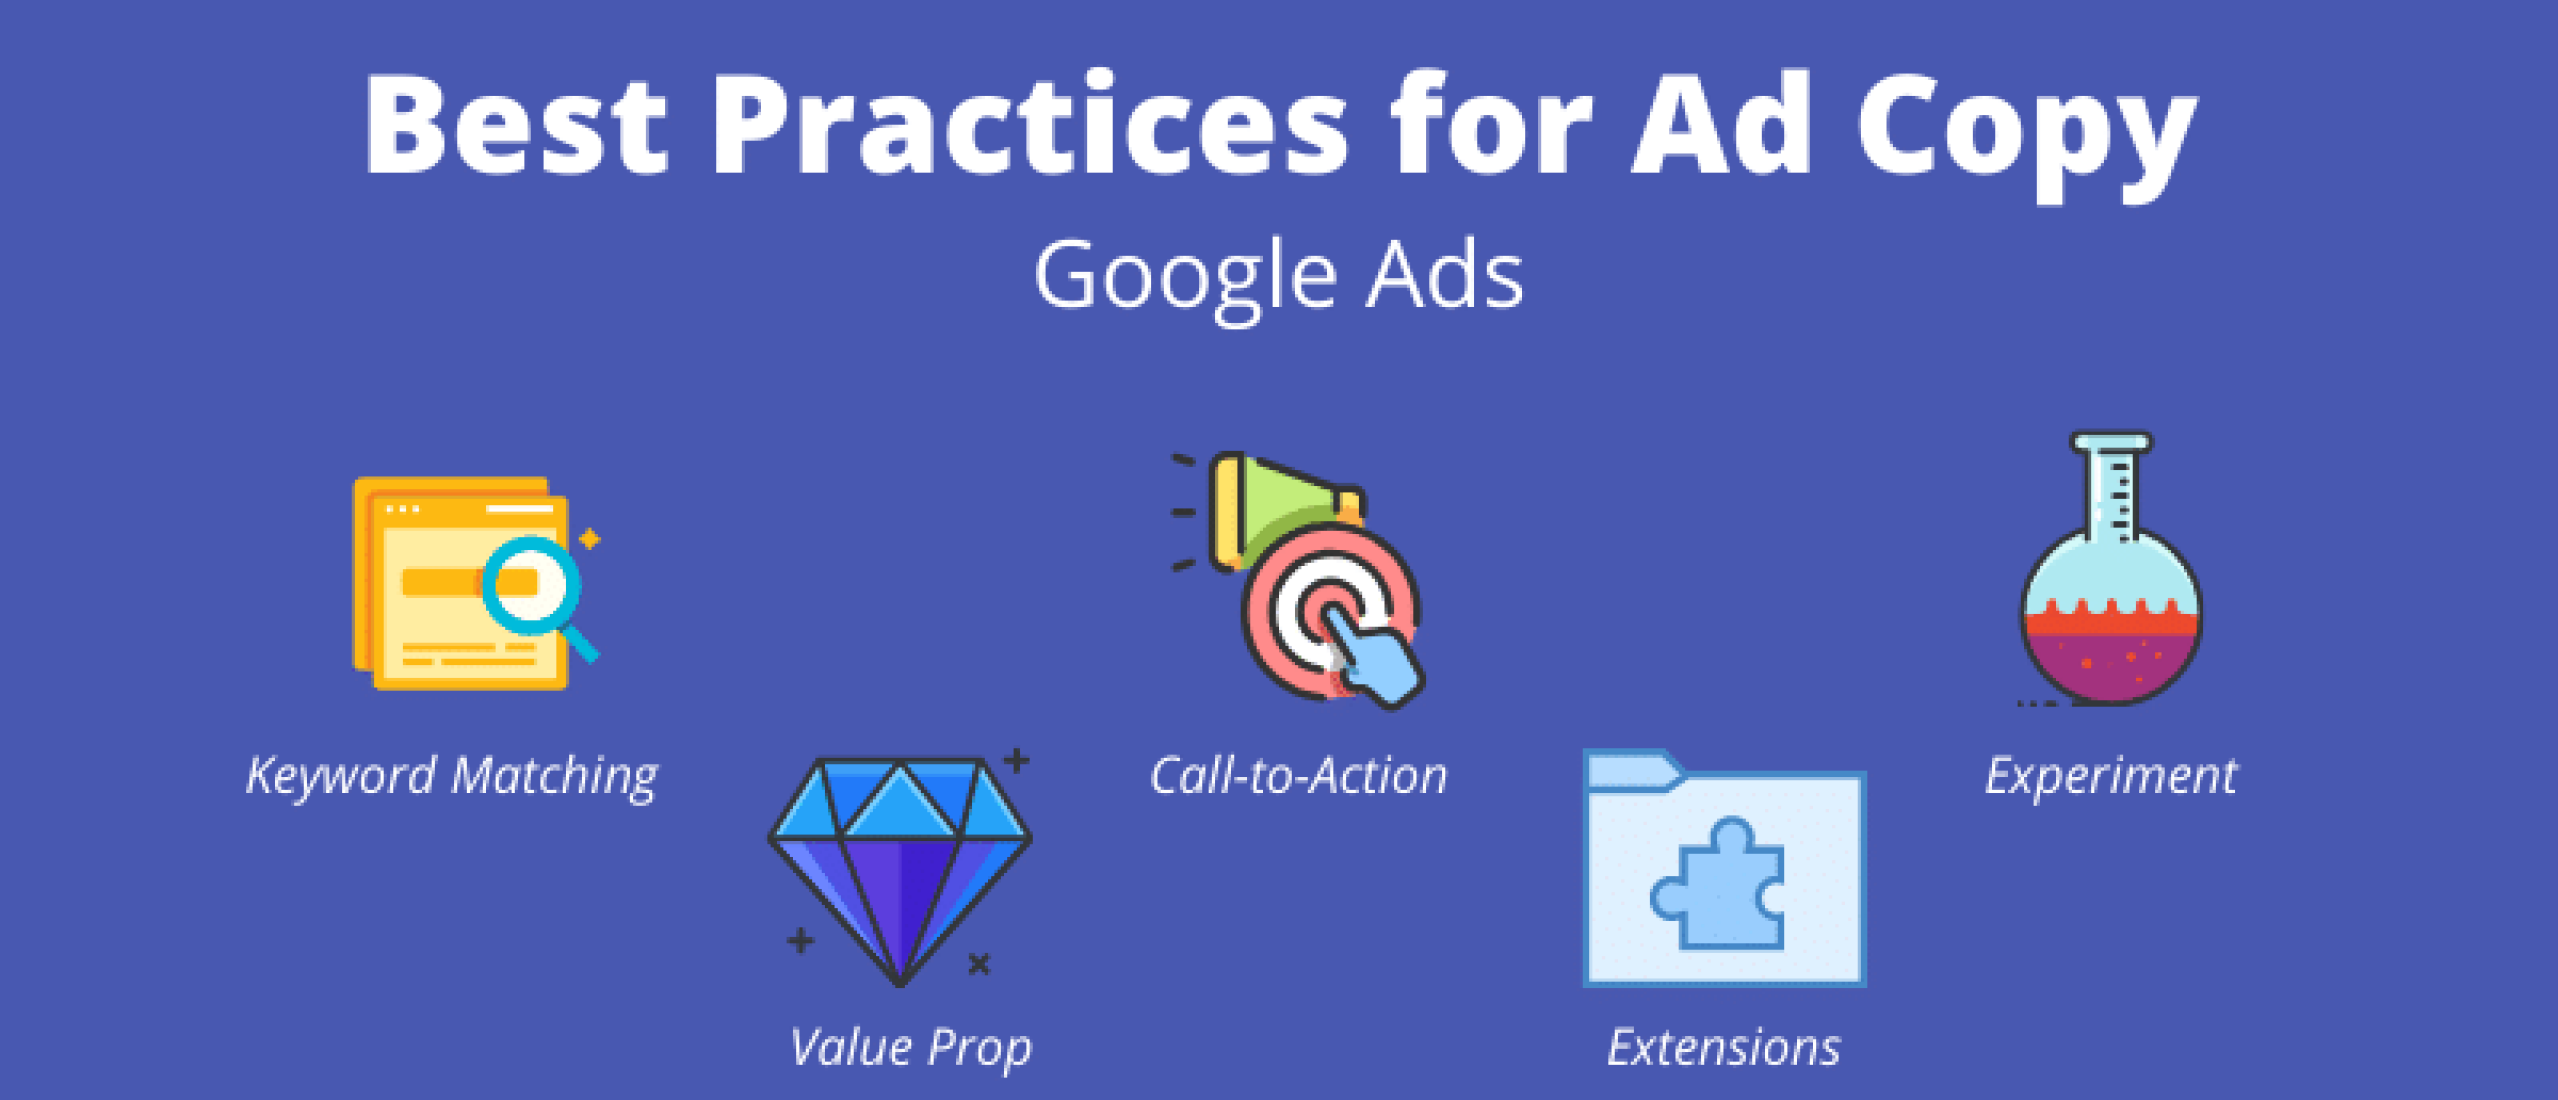 Google Ads best practices